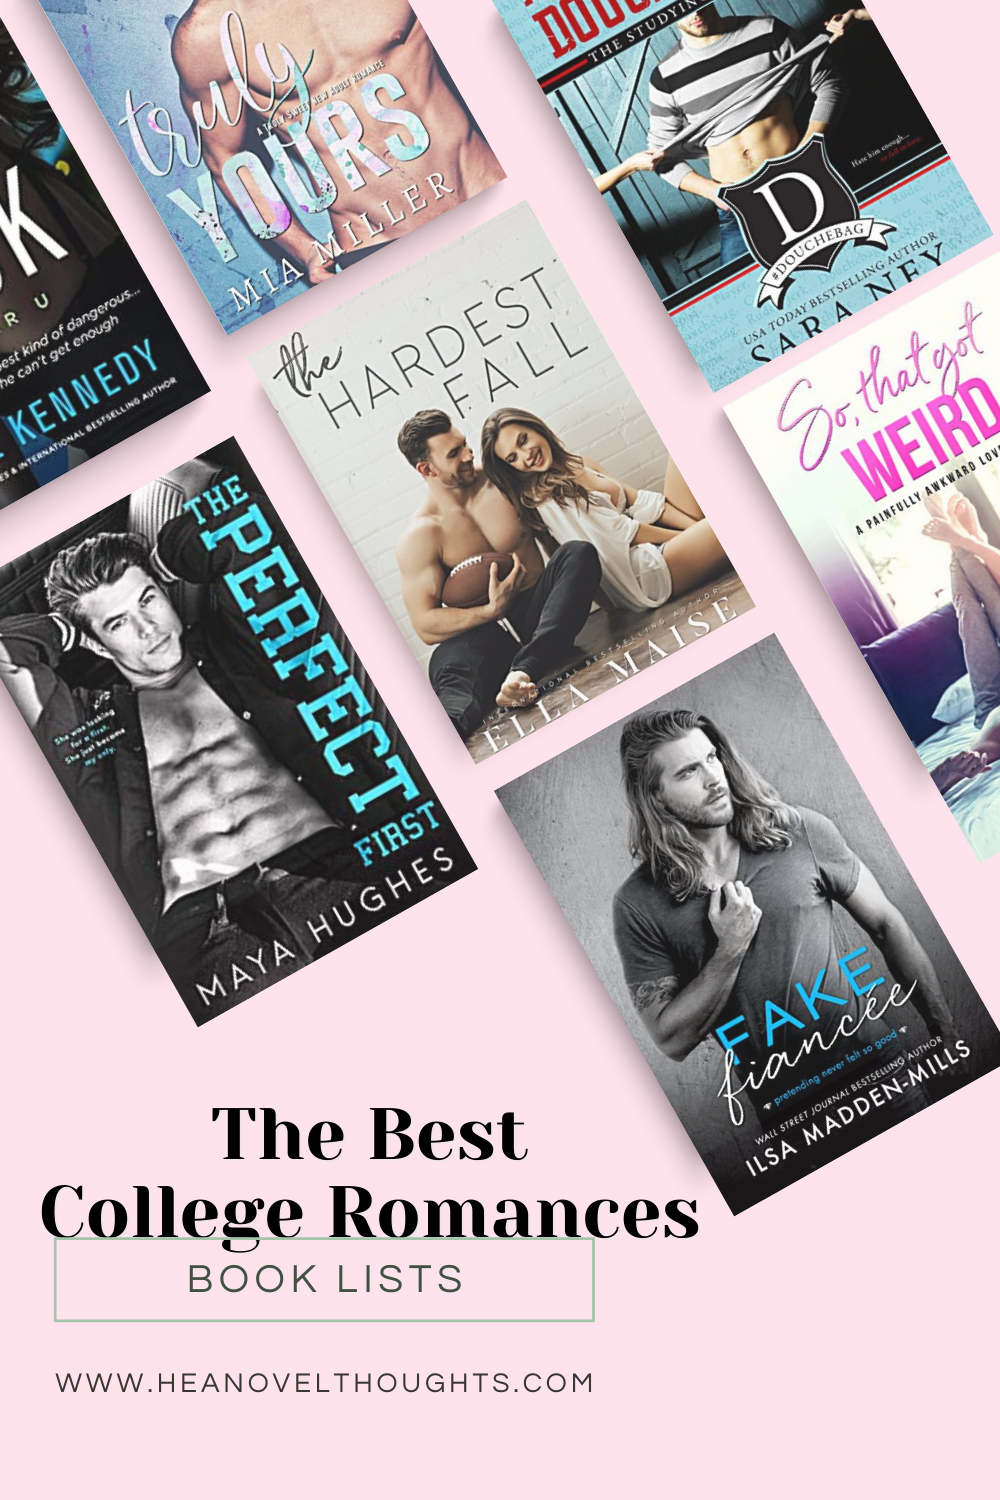 The Best College Romance Books